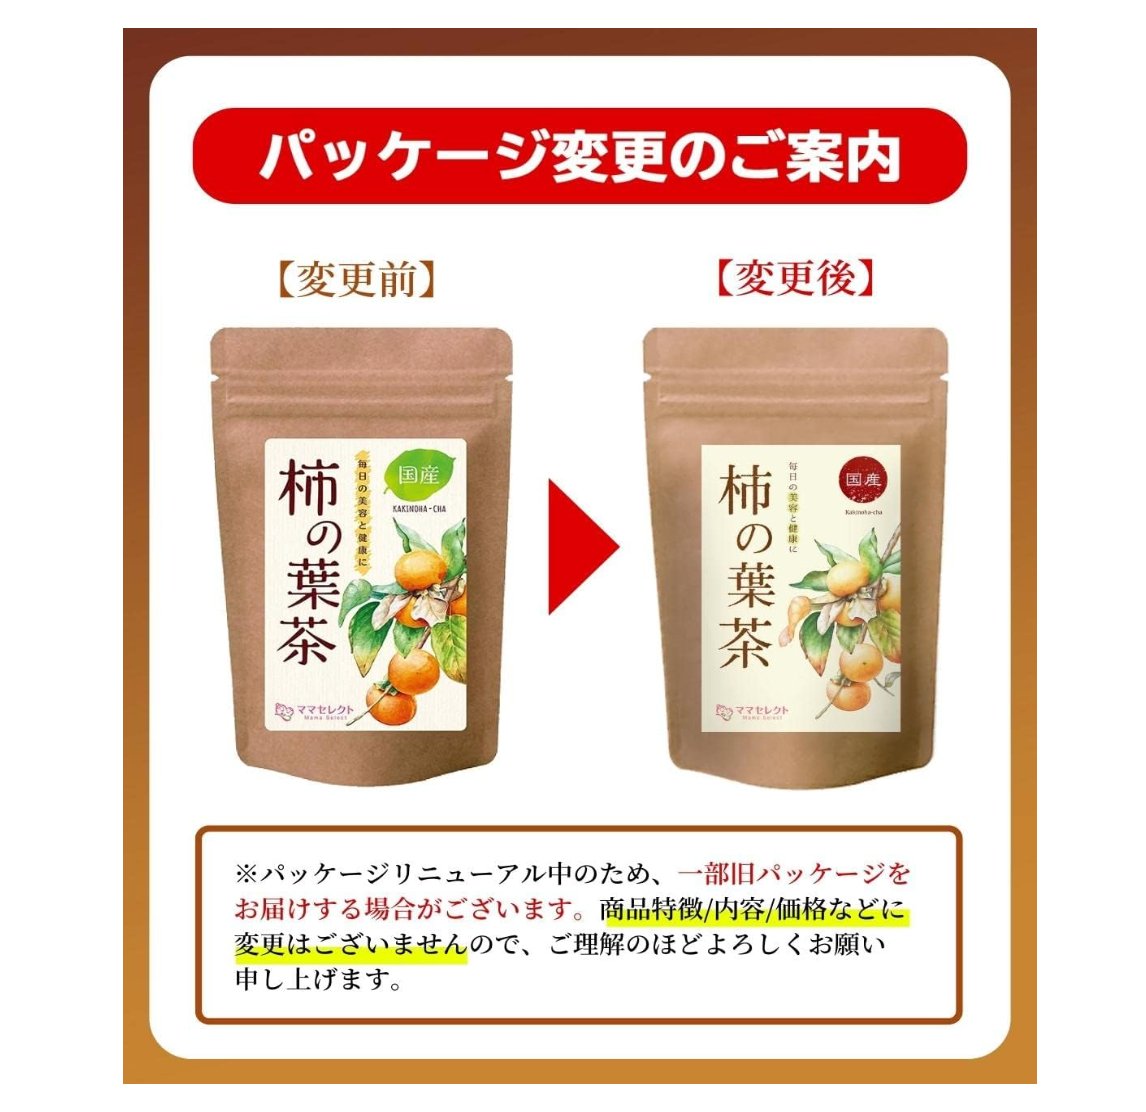 Honjien Tea Persimmon Leaf Tea 3g x 30 Bags - Non - Caffeine Tea - Pesticide Residue Testing